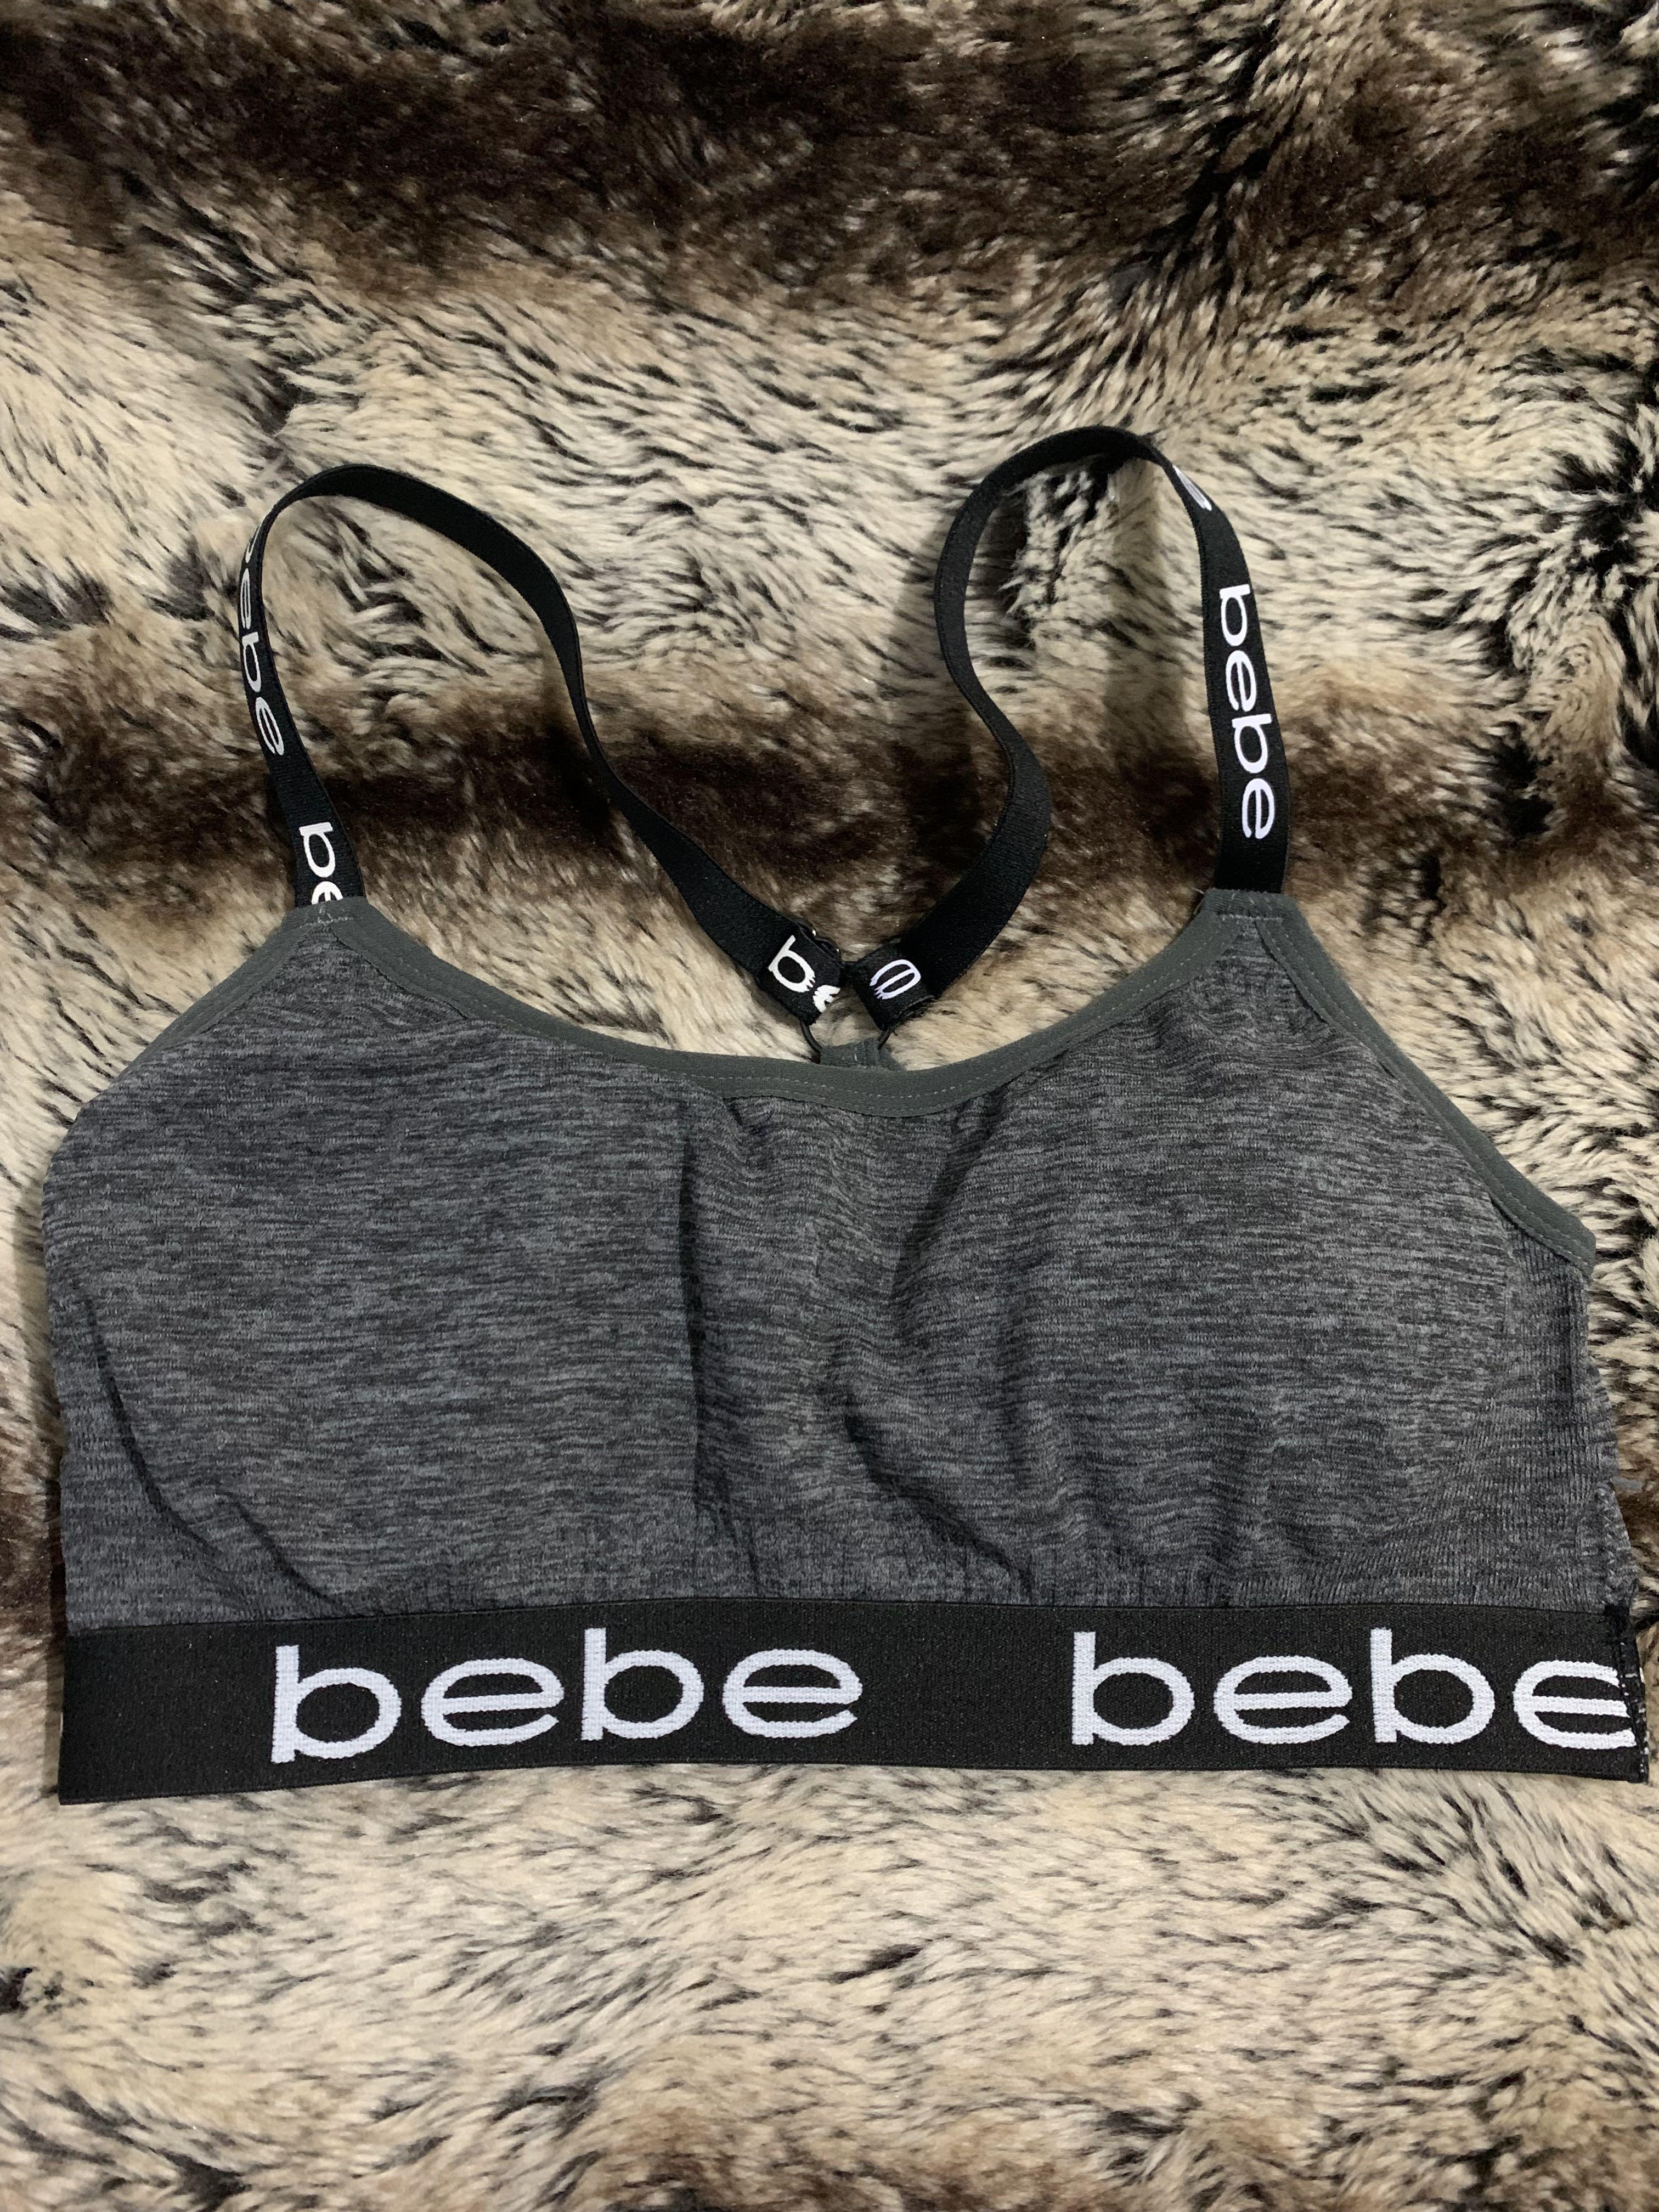 Bebe (Sports Bra), Men's Fashion, Activewear on Carousell